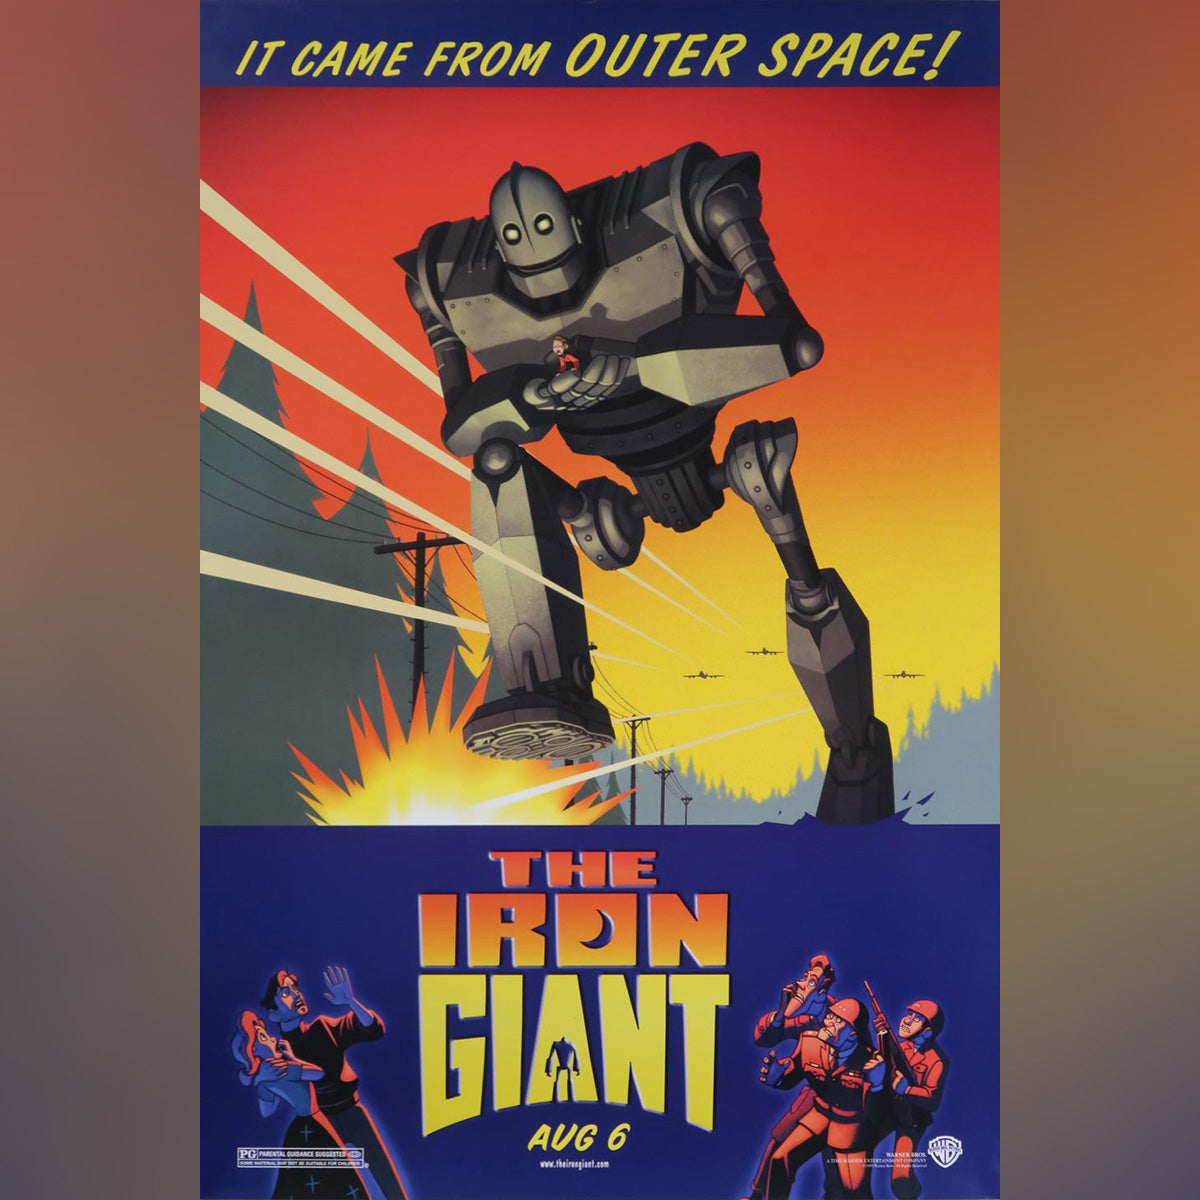 Original Movie Poster of Iron Giant, The (1999)